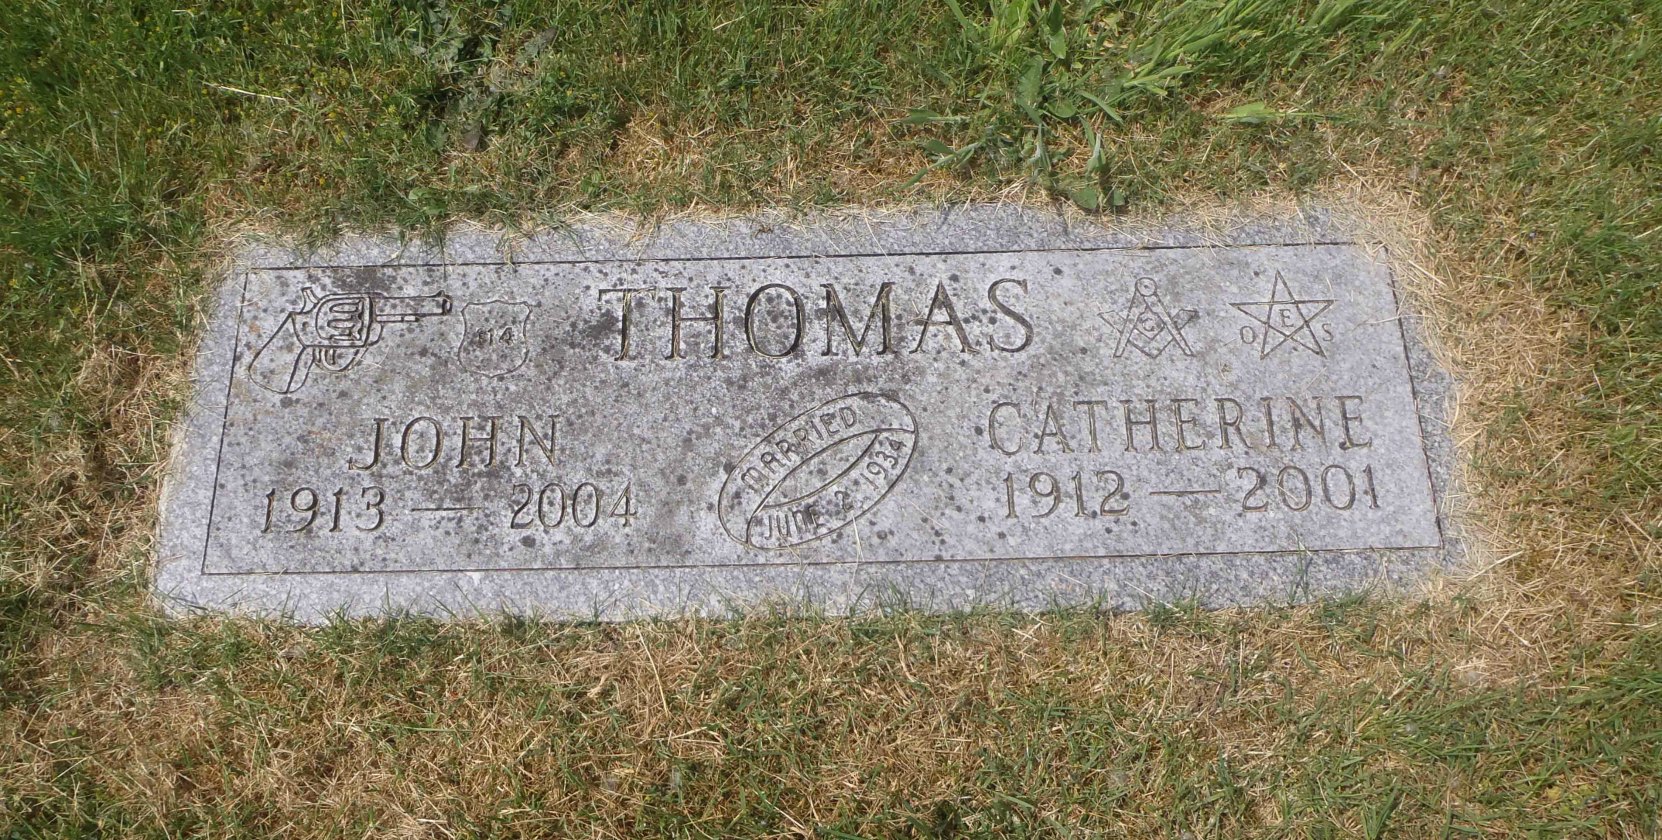 John Thomas and Catherine Thomas grave marker, Shawnigan Cemetery, Shawnigan Lake, B.C. (photo by Temple Lodge No. 33 Historian)